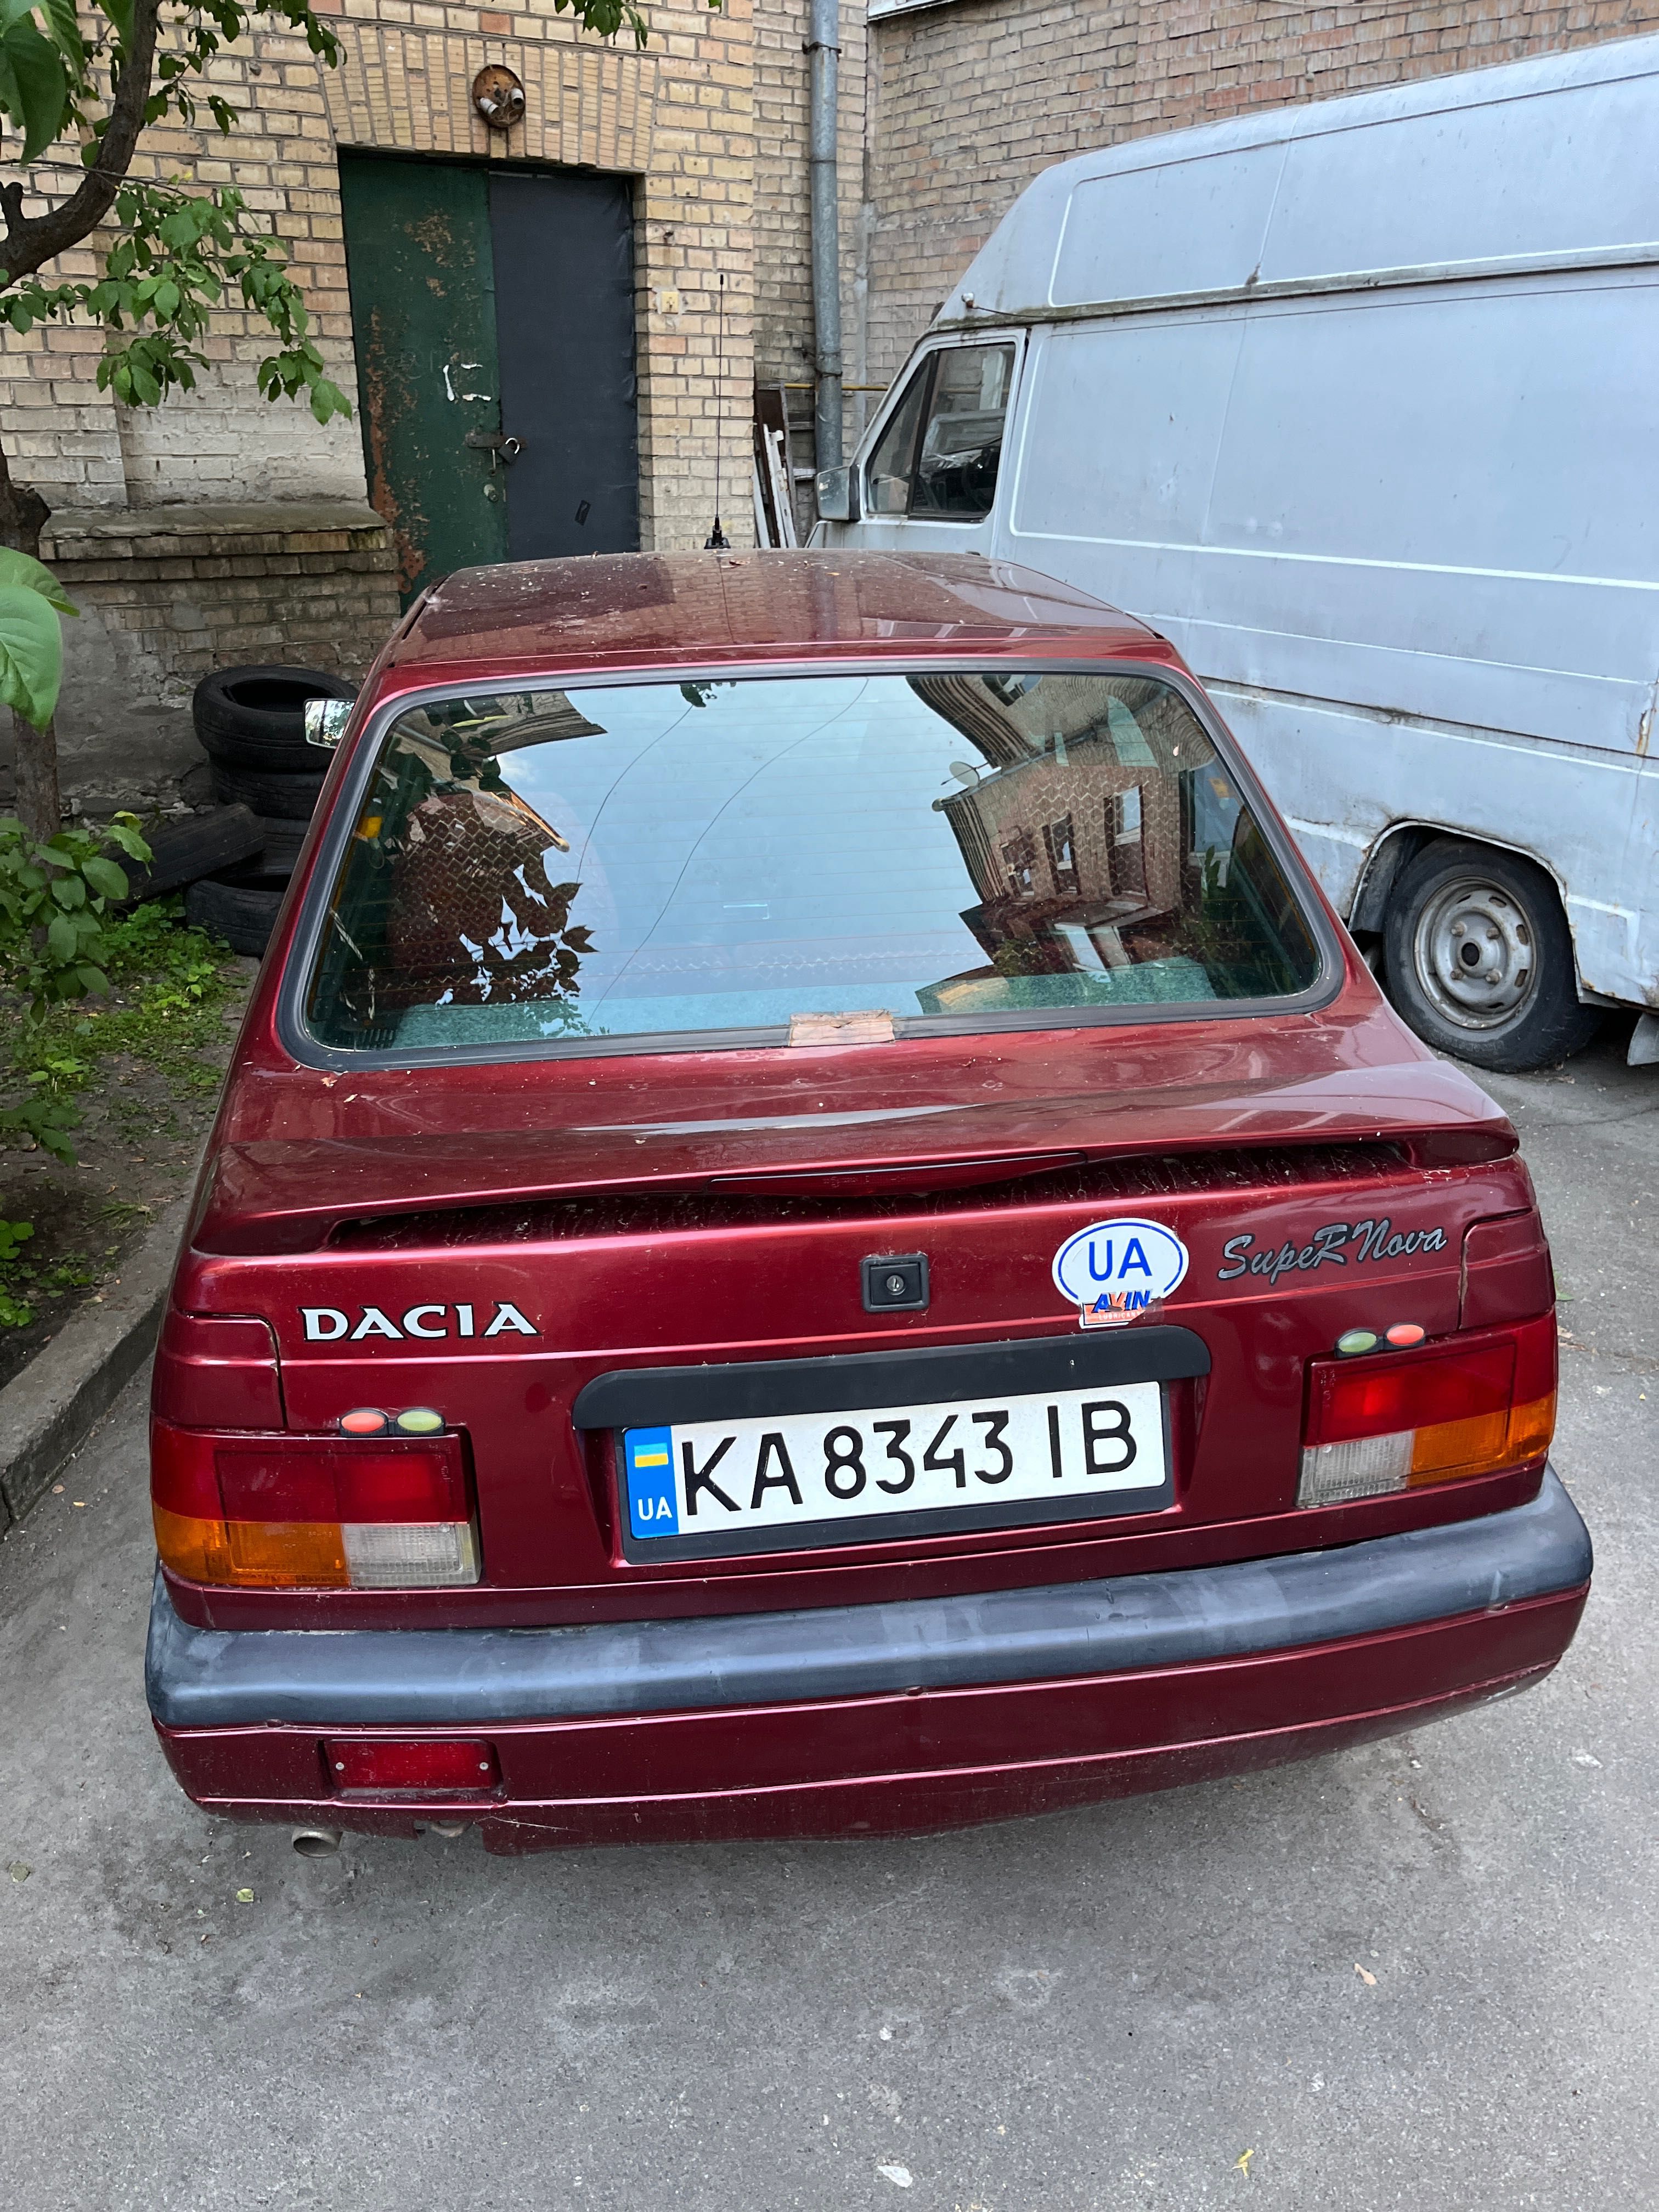 Dacia supernova 1.4 clima